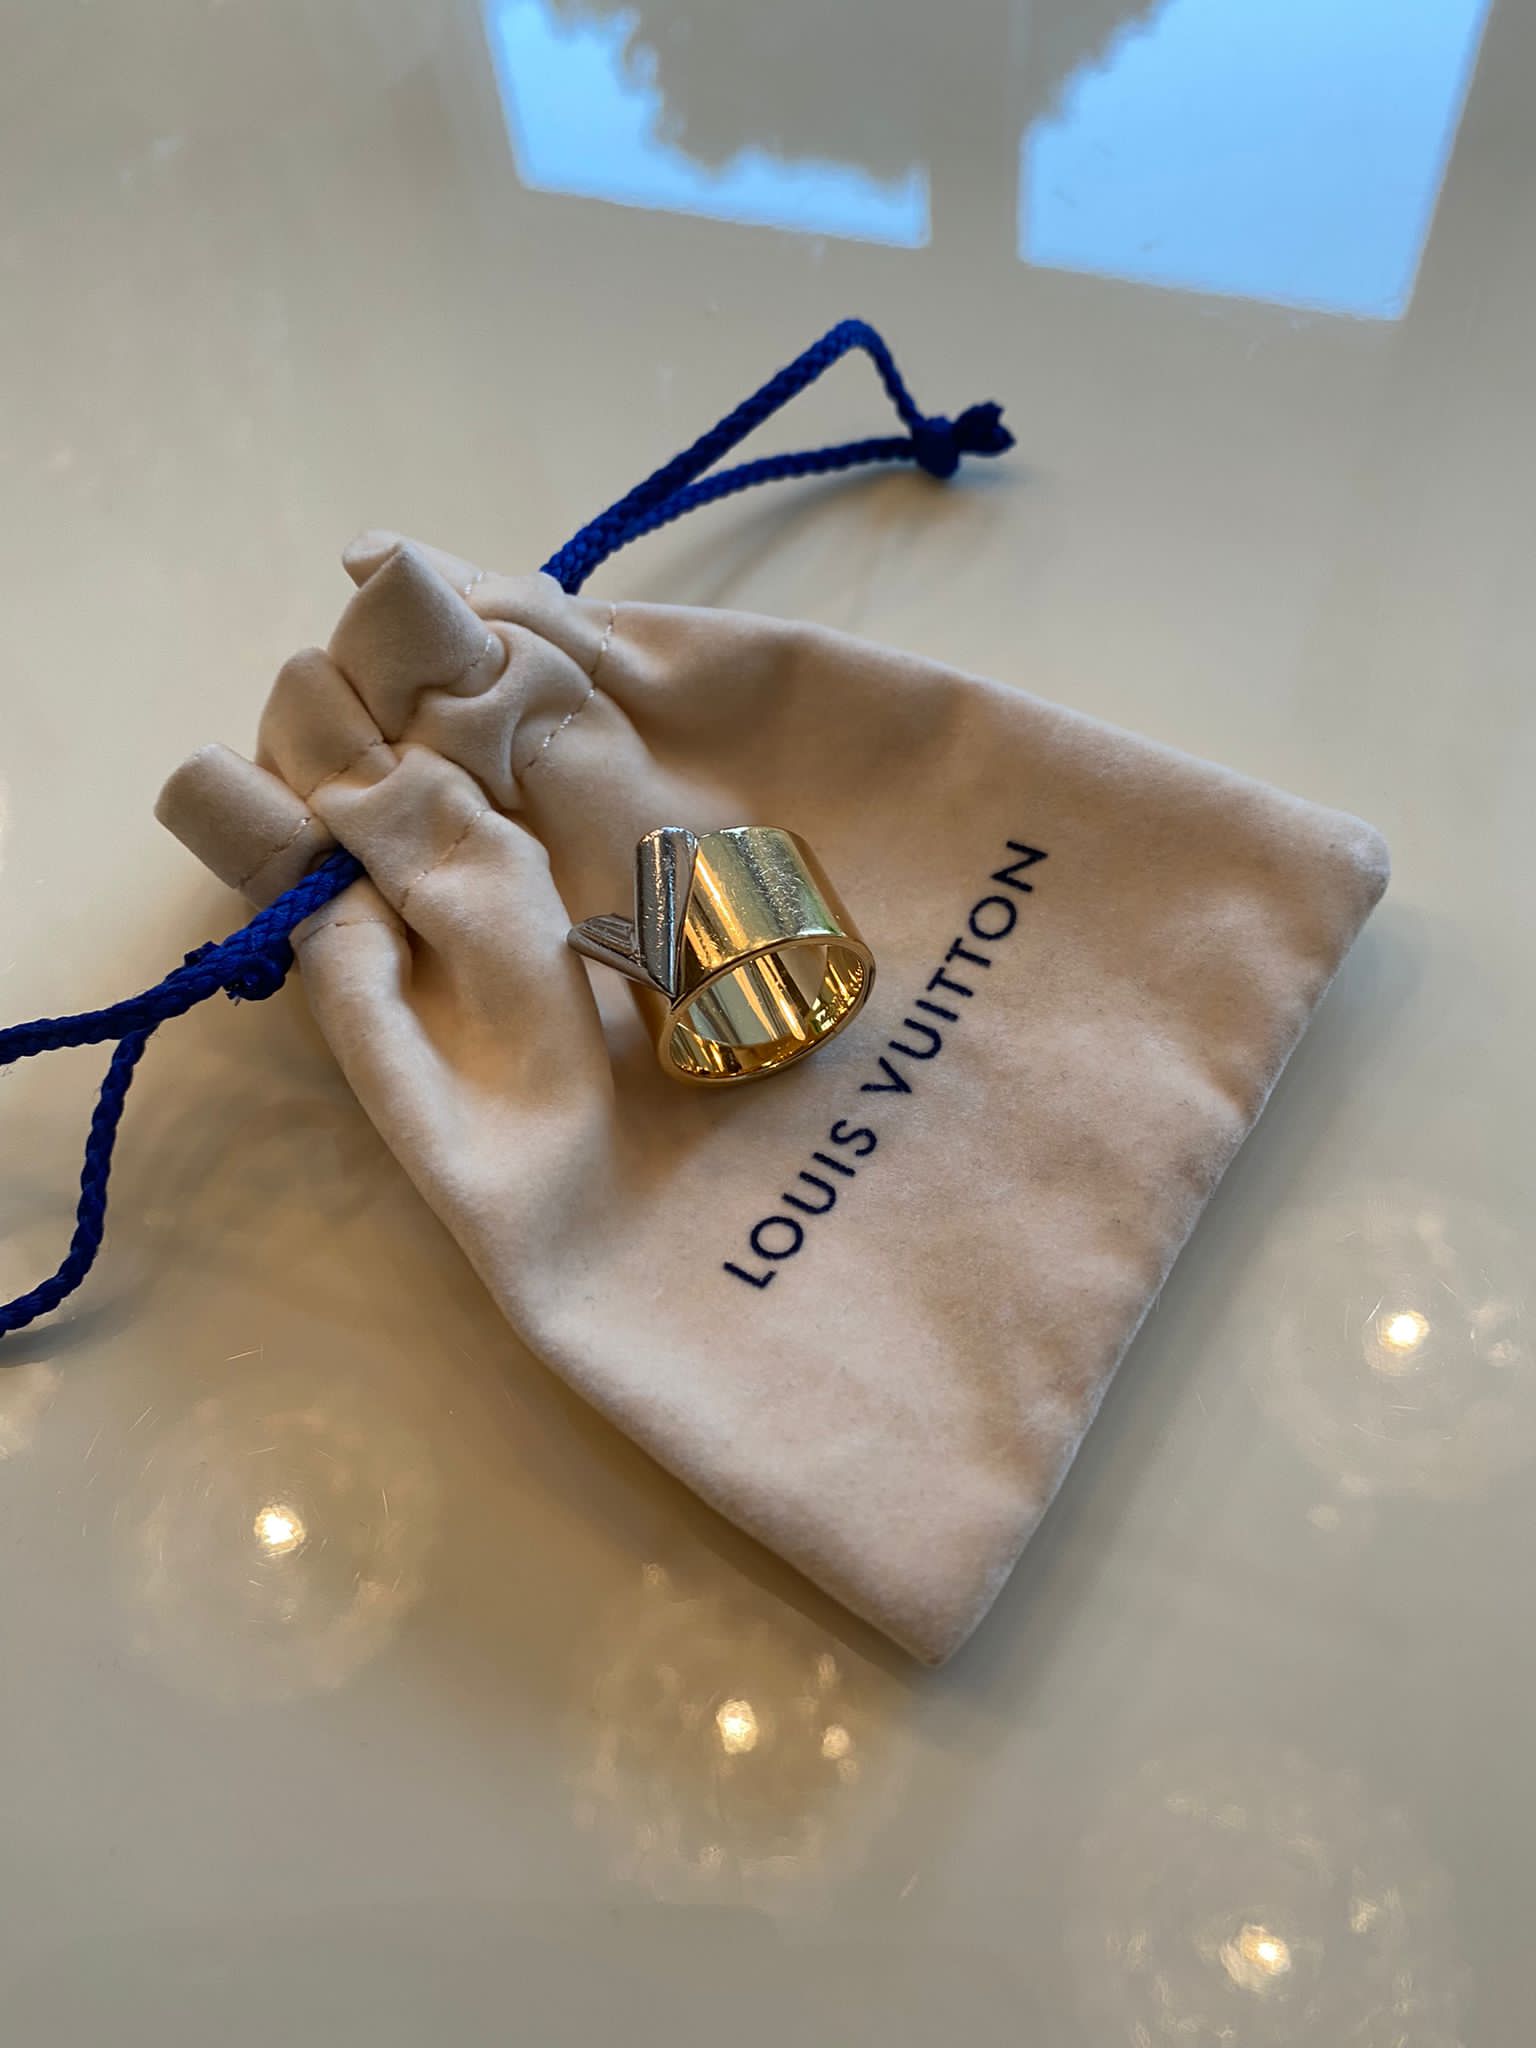 Louis Vuitton Essential V Ring, Gold, L